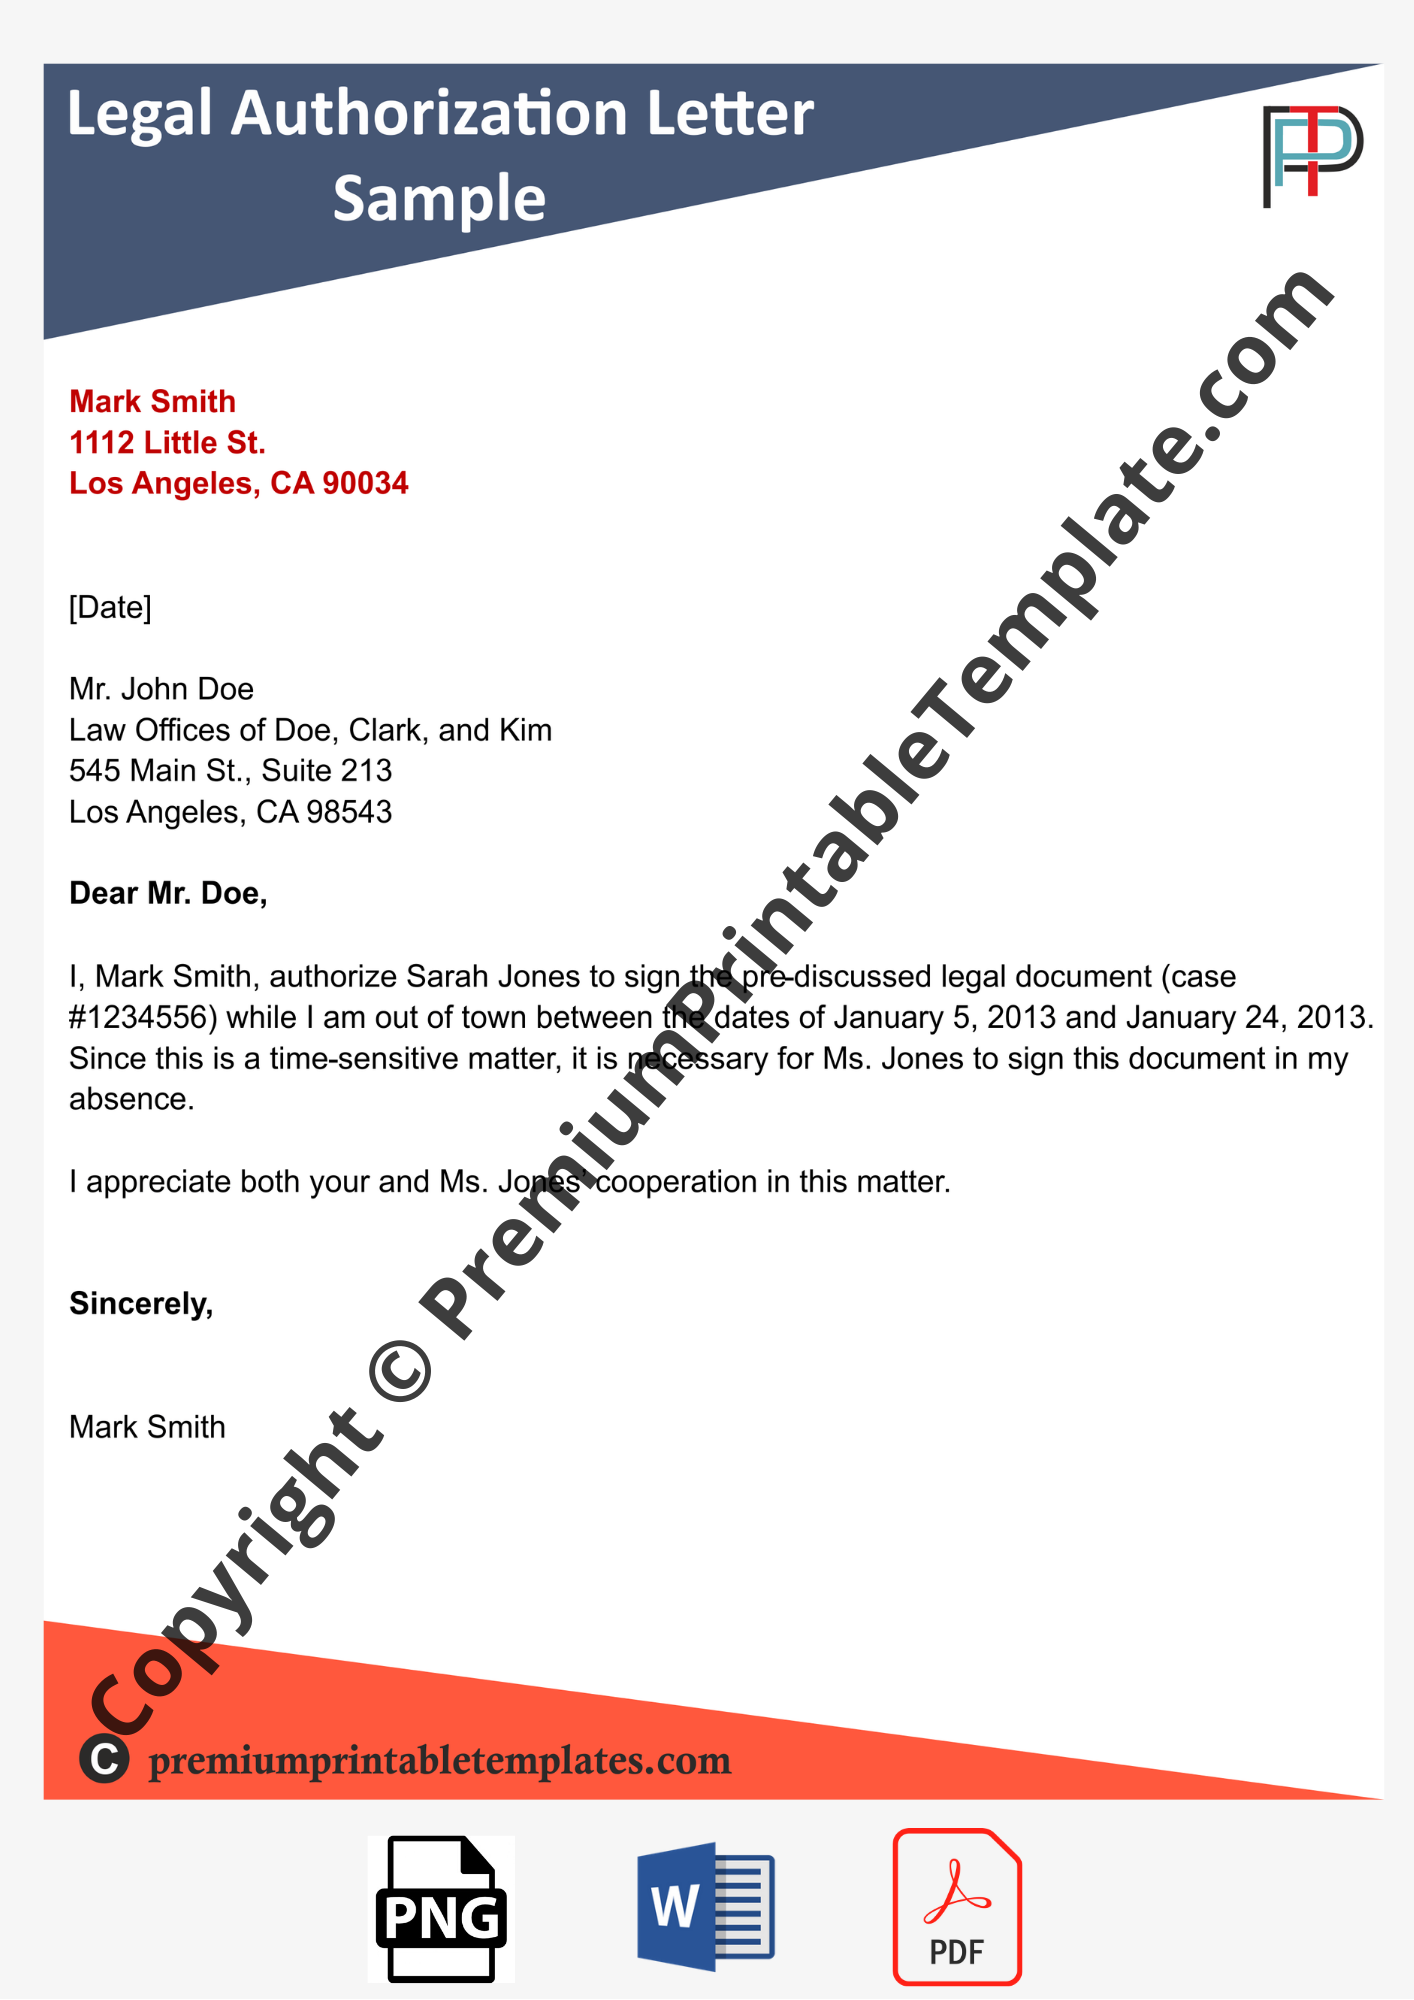 Legal Letter Format Template from premiumprintabletemplates.com